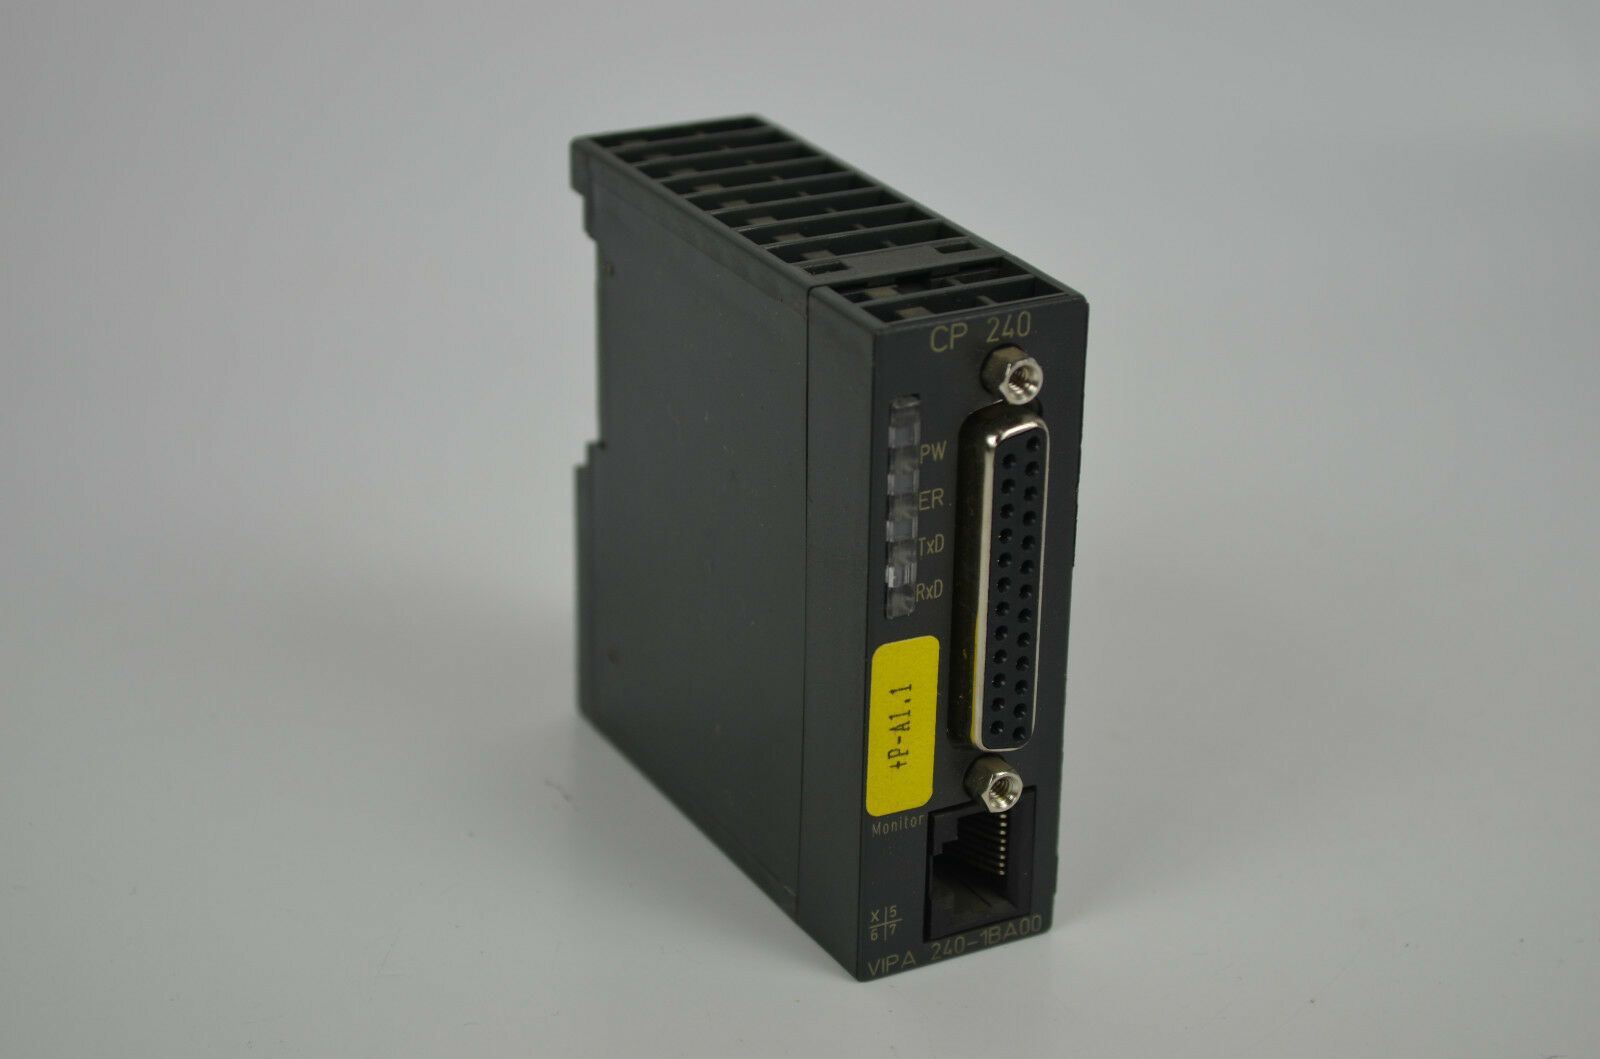 Vipa CP 240 240-1BA00 / E4 